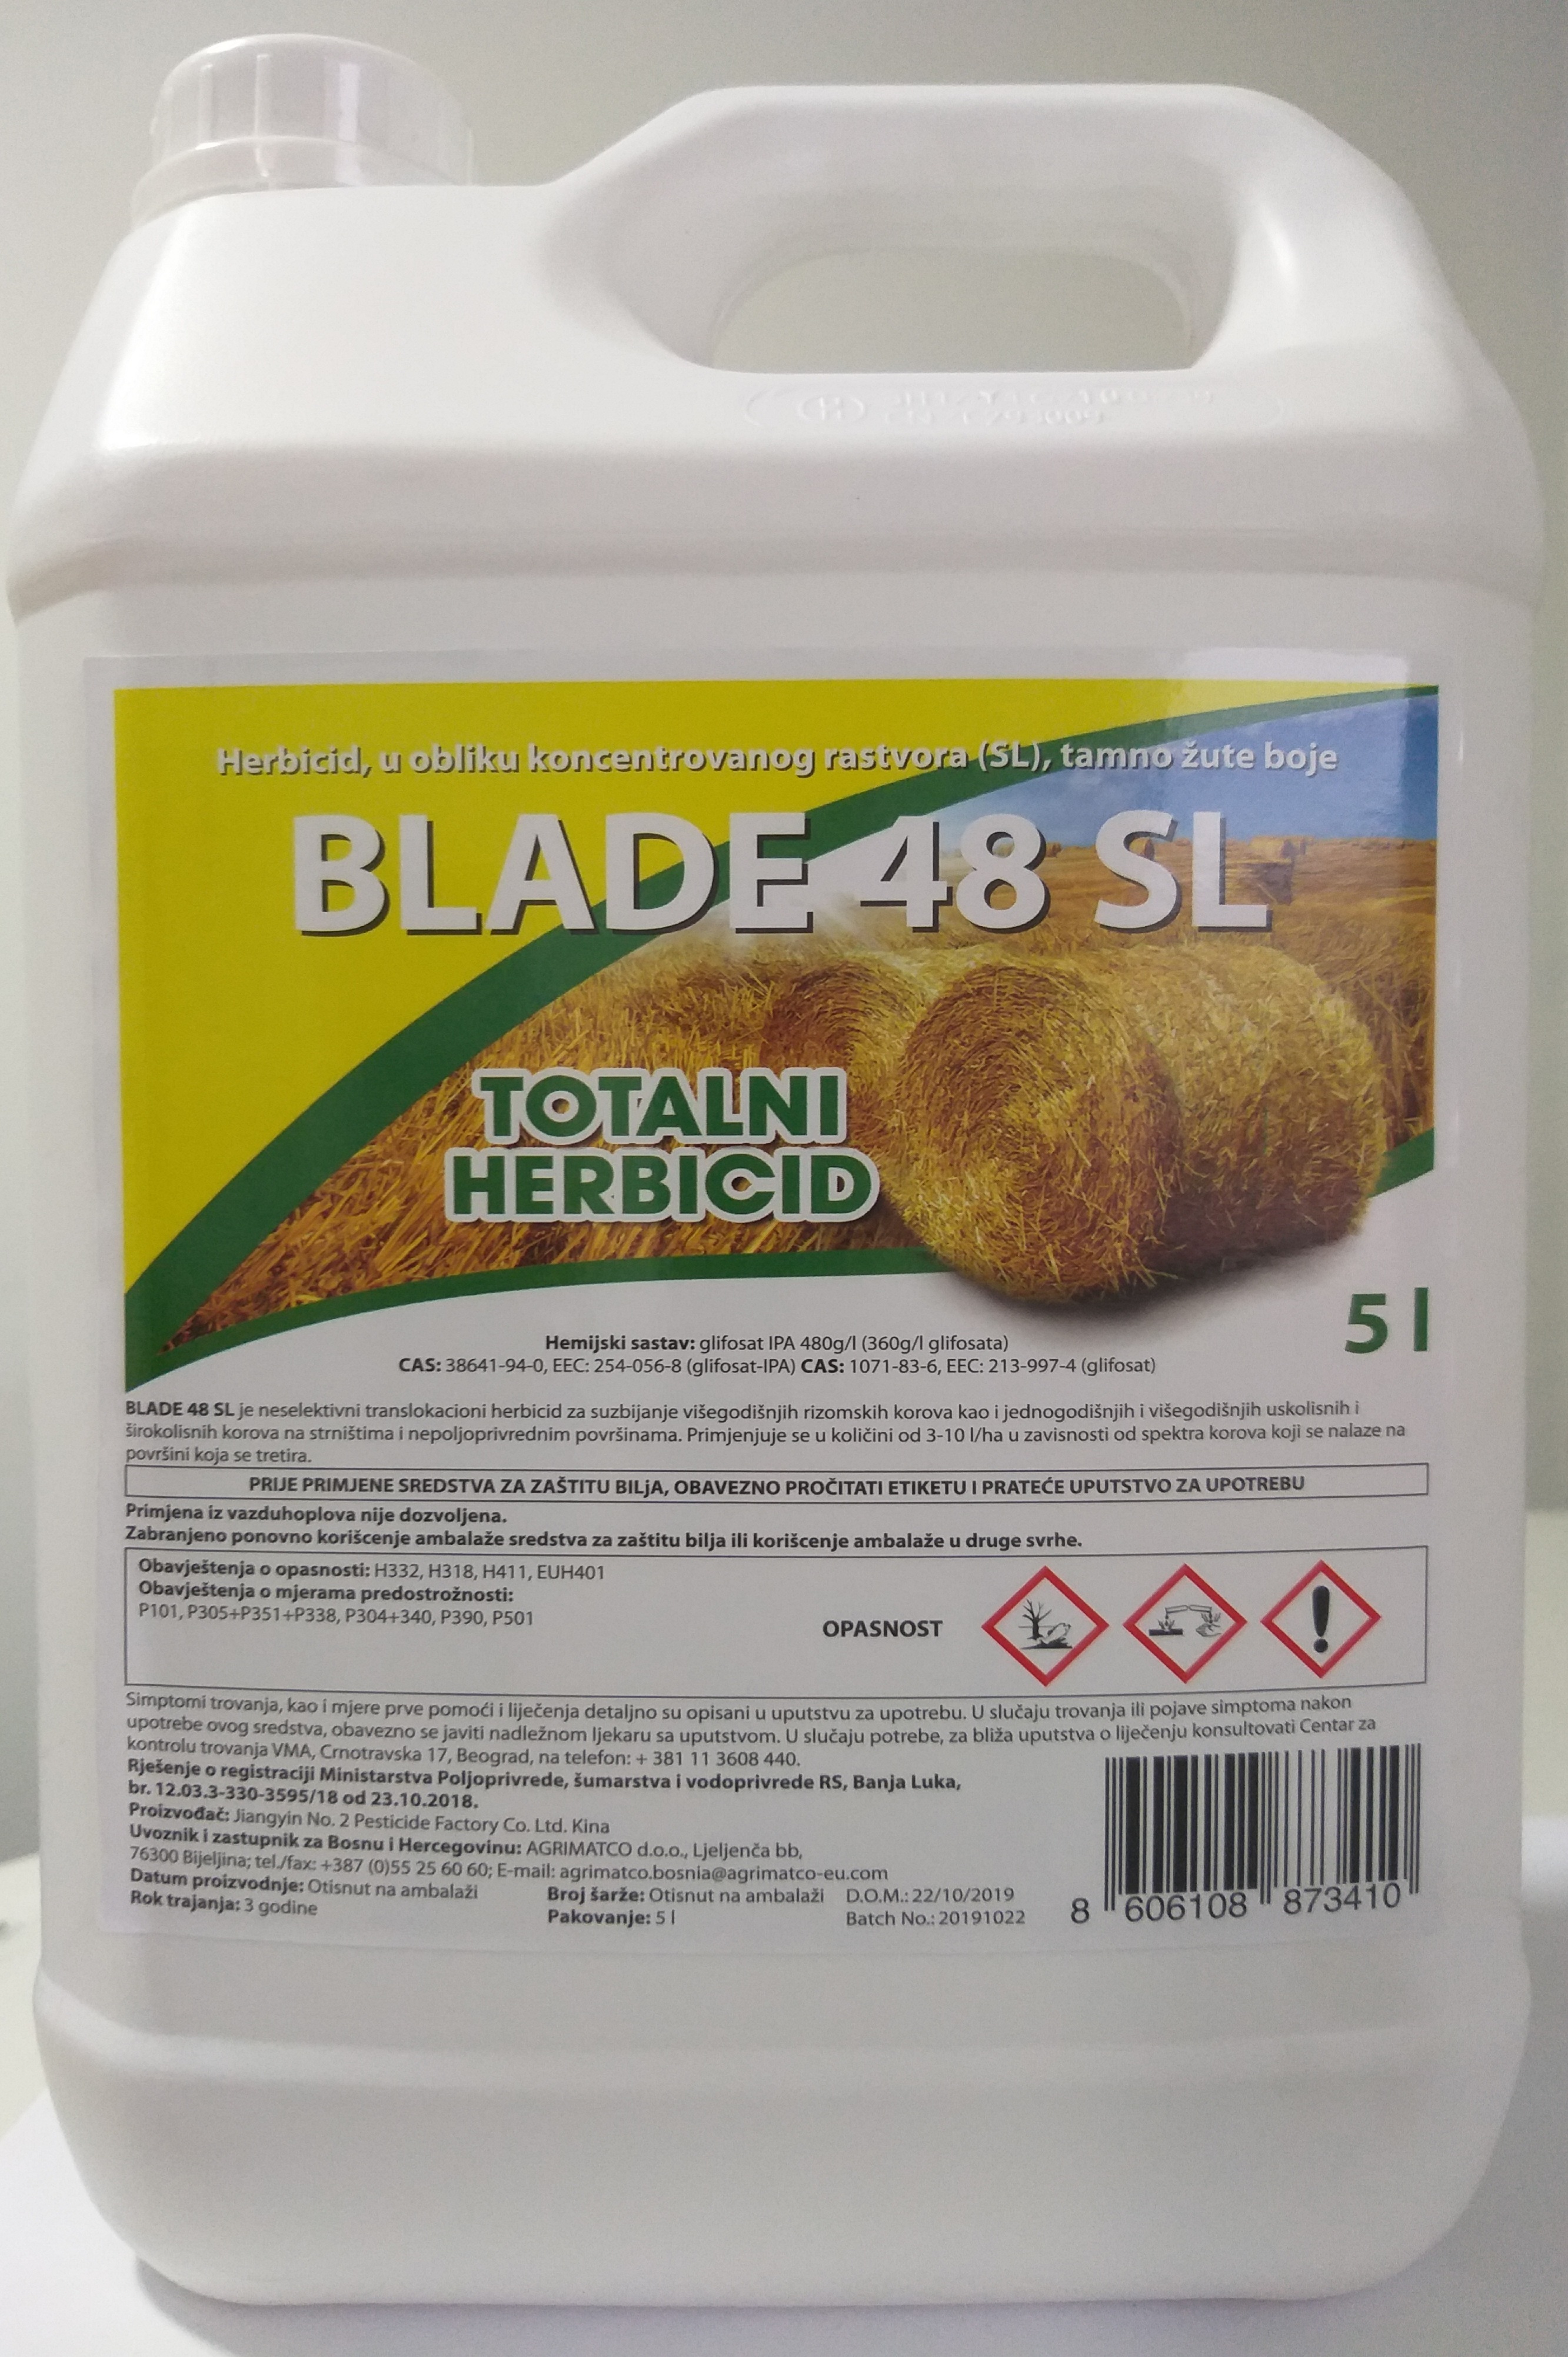 Blade 48 SL